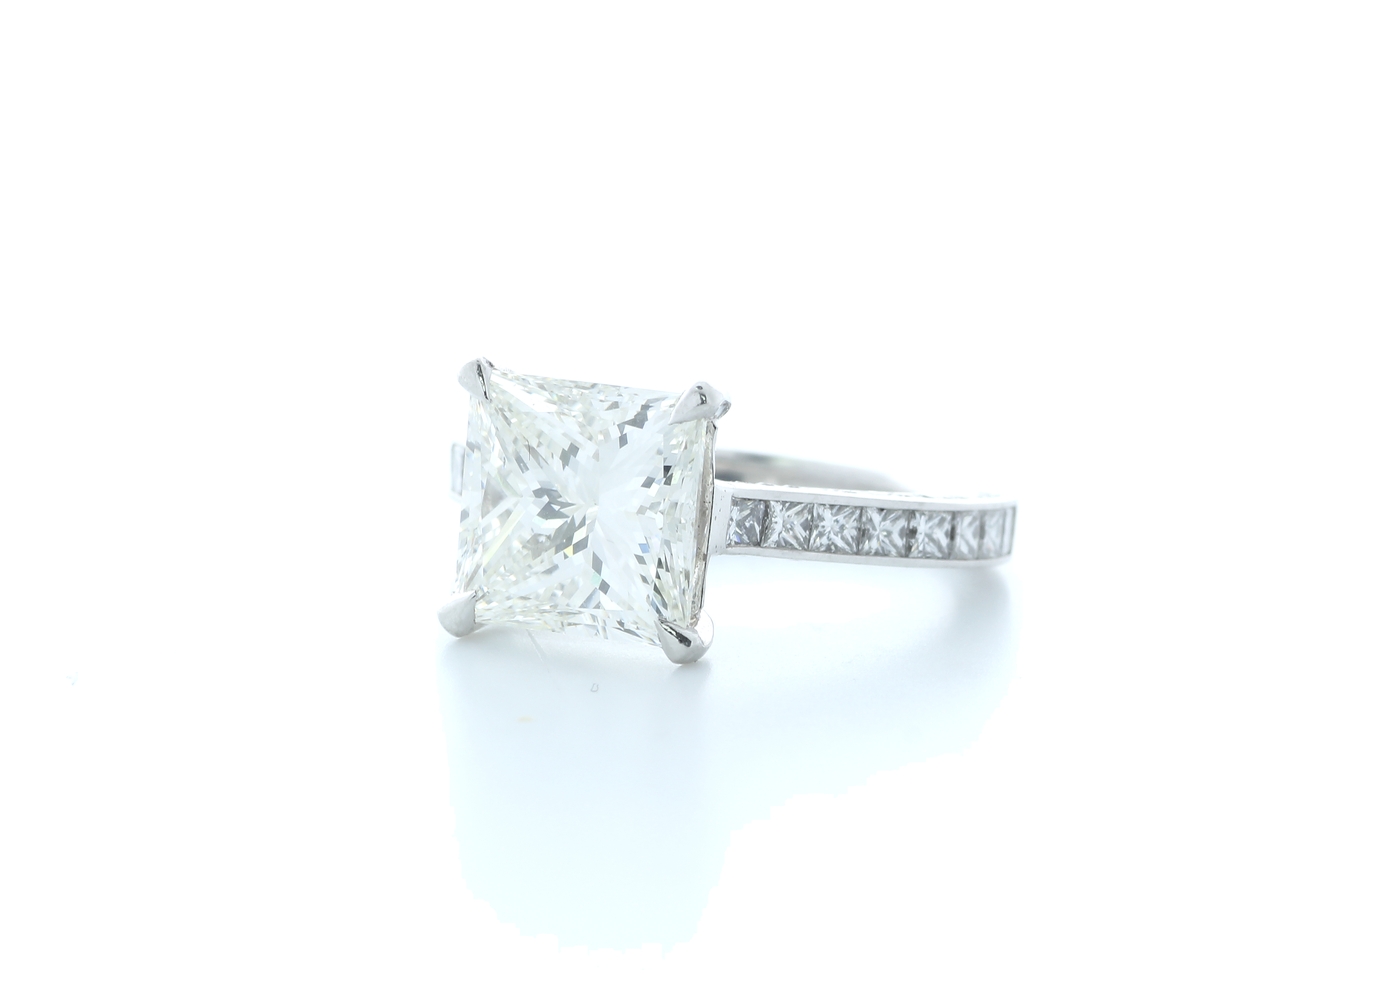 18ct White Gold Princess Cut Diamond Ring 5.13 (4.33) Carats - Image 2 of 5